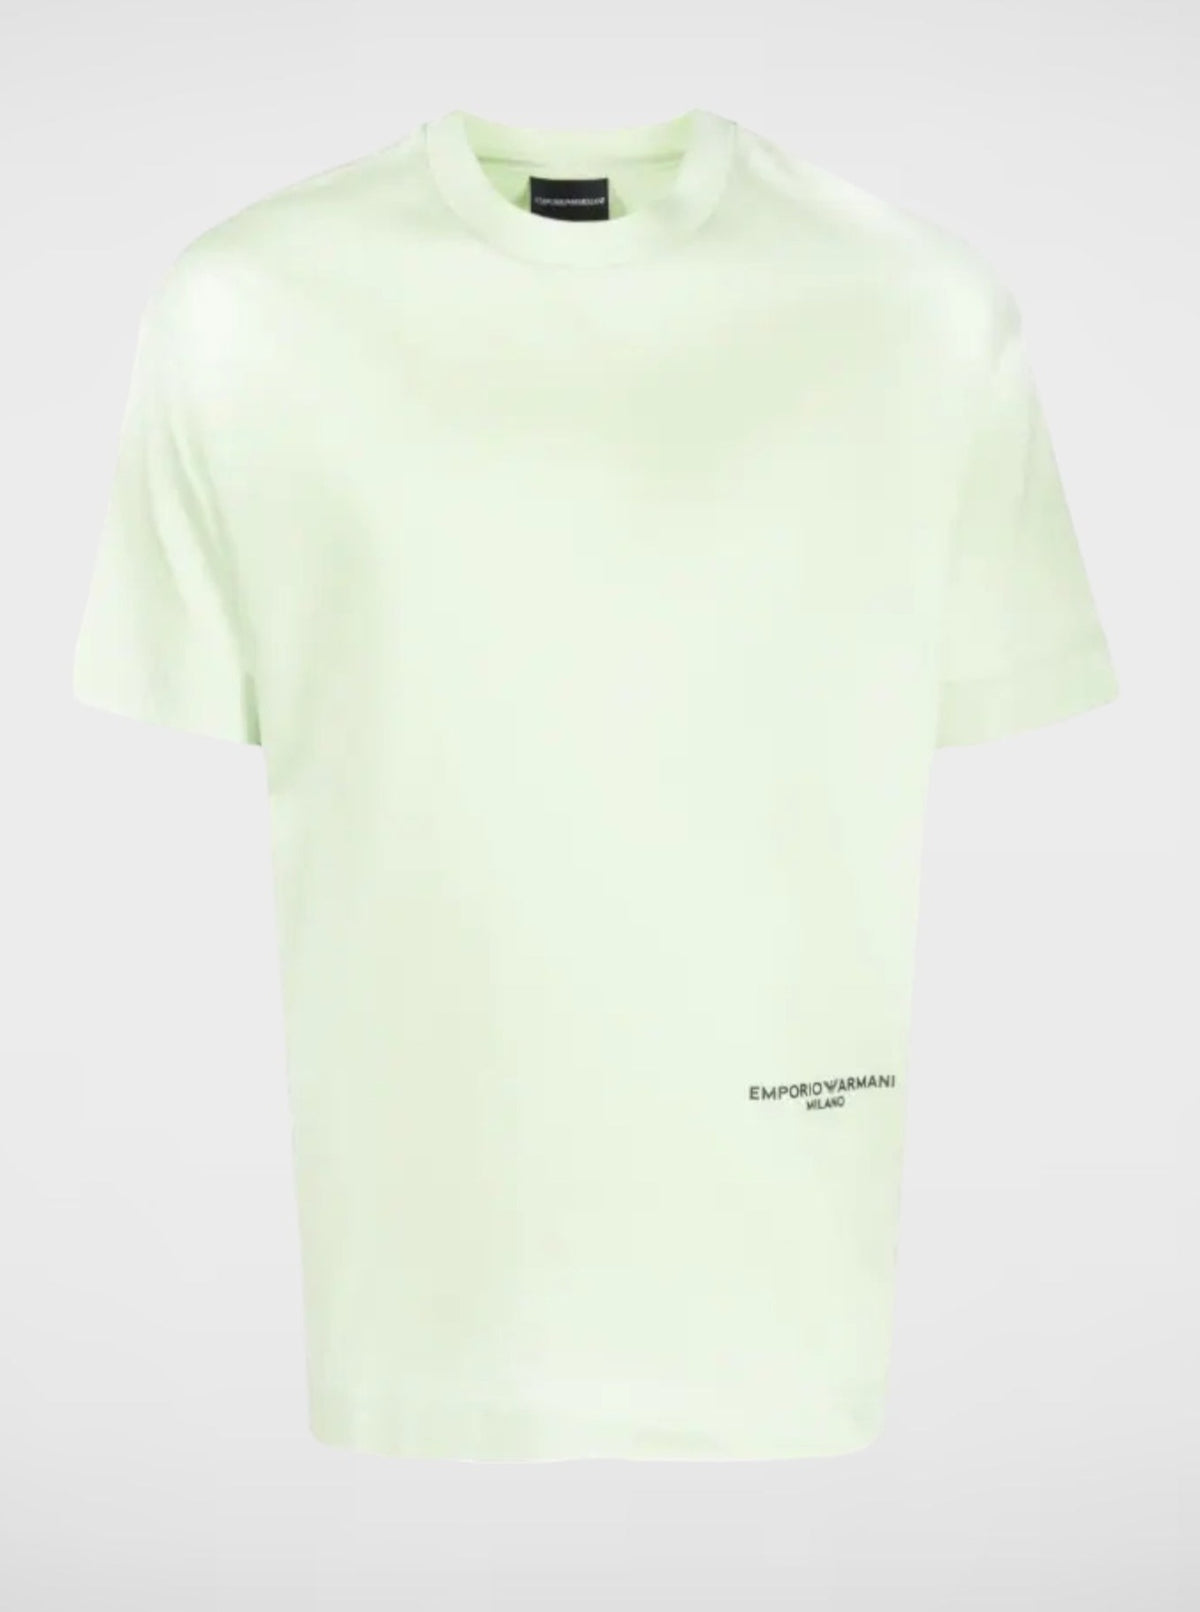 Emporio Armani T-shirt in Limoengroen